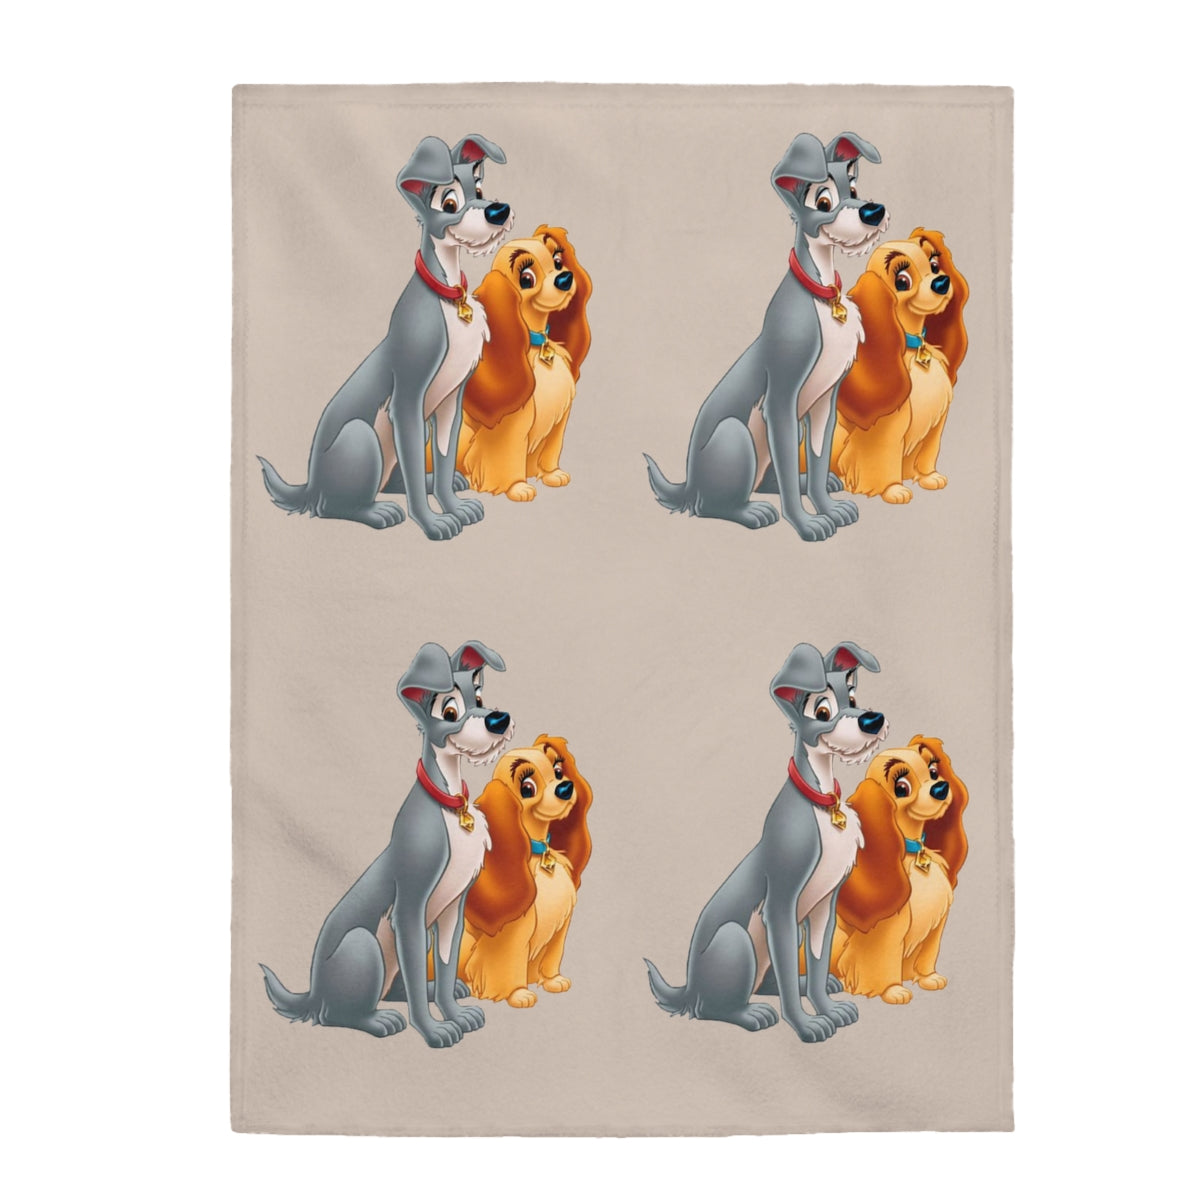 Kids Blanket Personalised, Dog ThemeThrow Blanket, Plush Super Soft Cozy Throw Blankets 3 Sizes